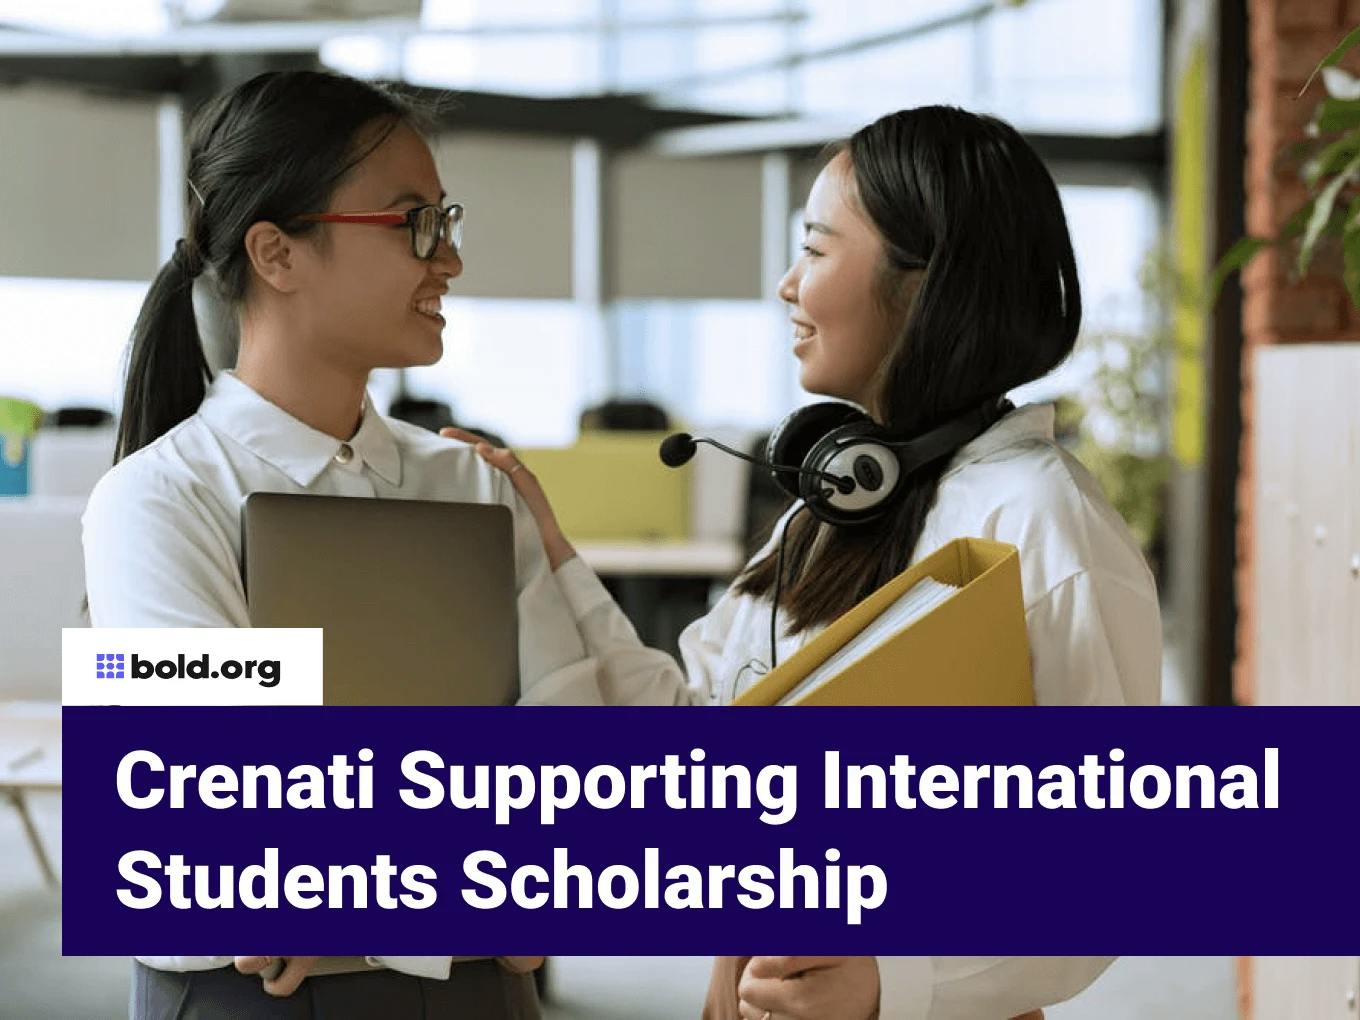 Crenati Foundation Supporting International Students Scholarship